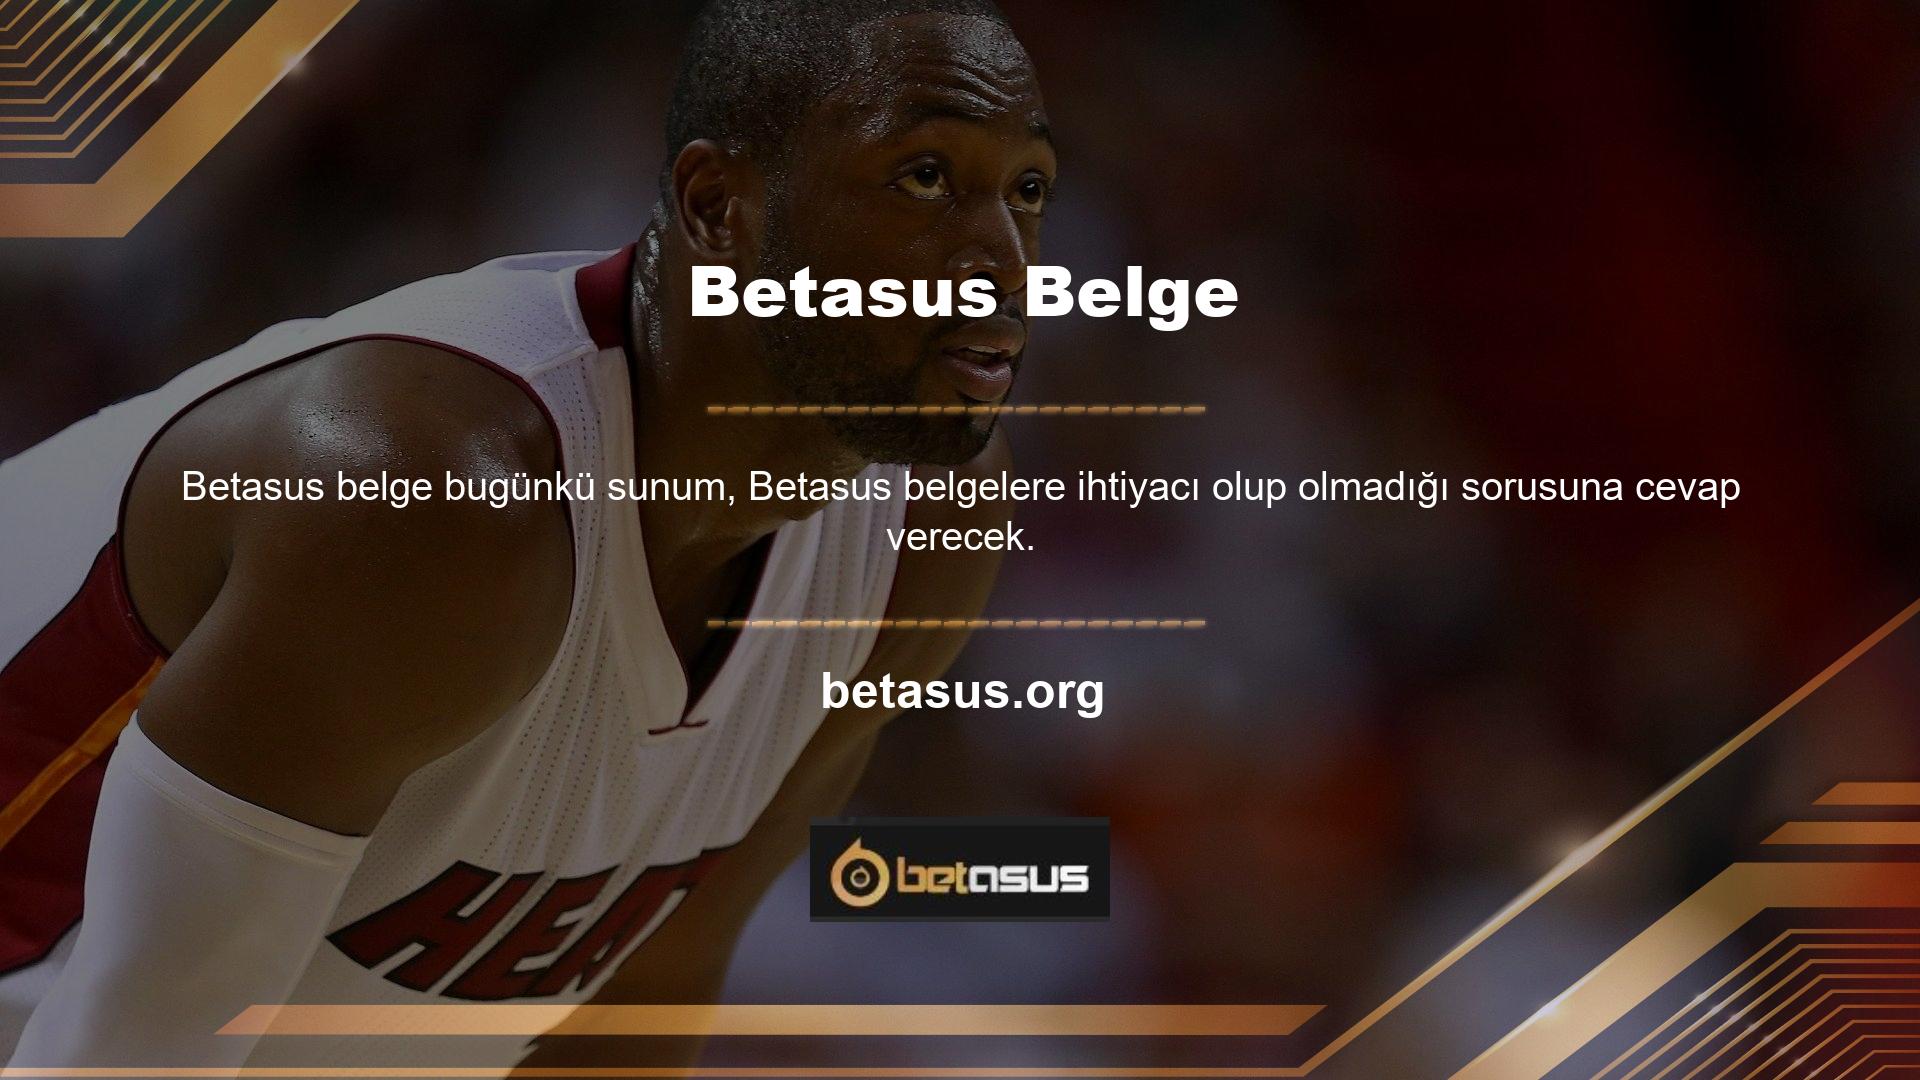 Betasus, Siteden para çekmeden önce belge ister